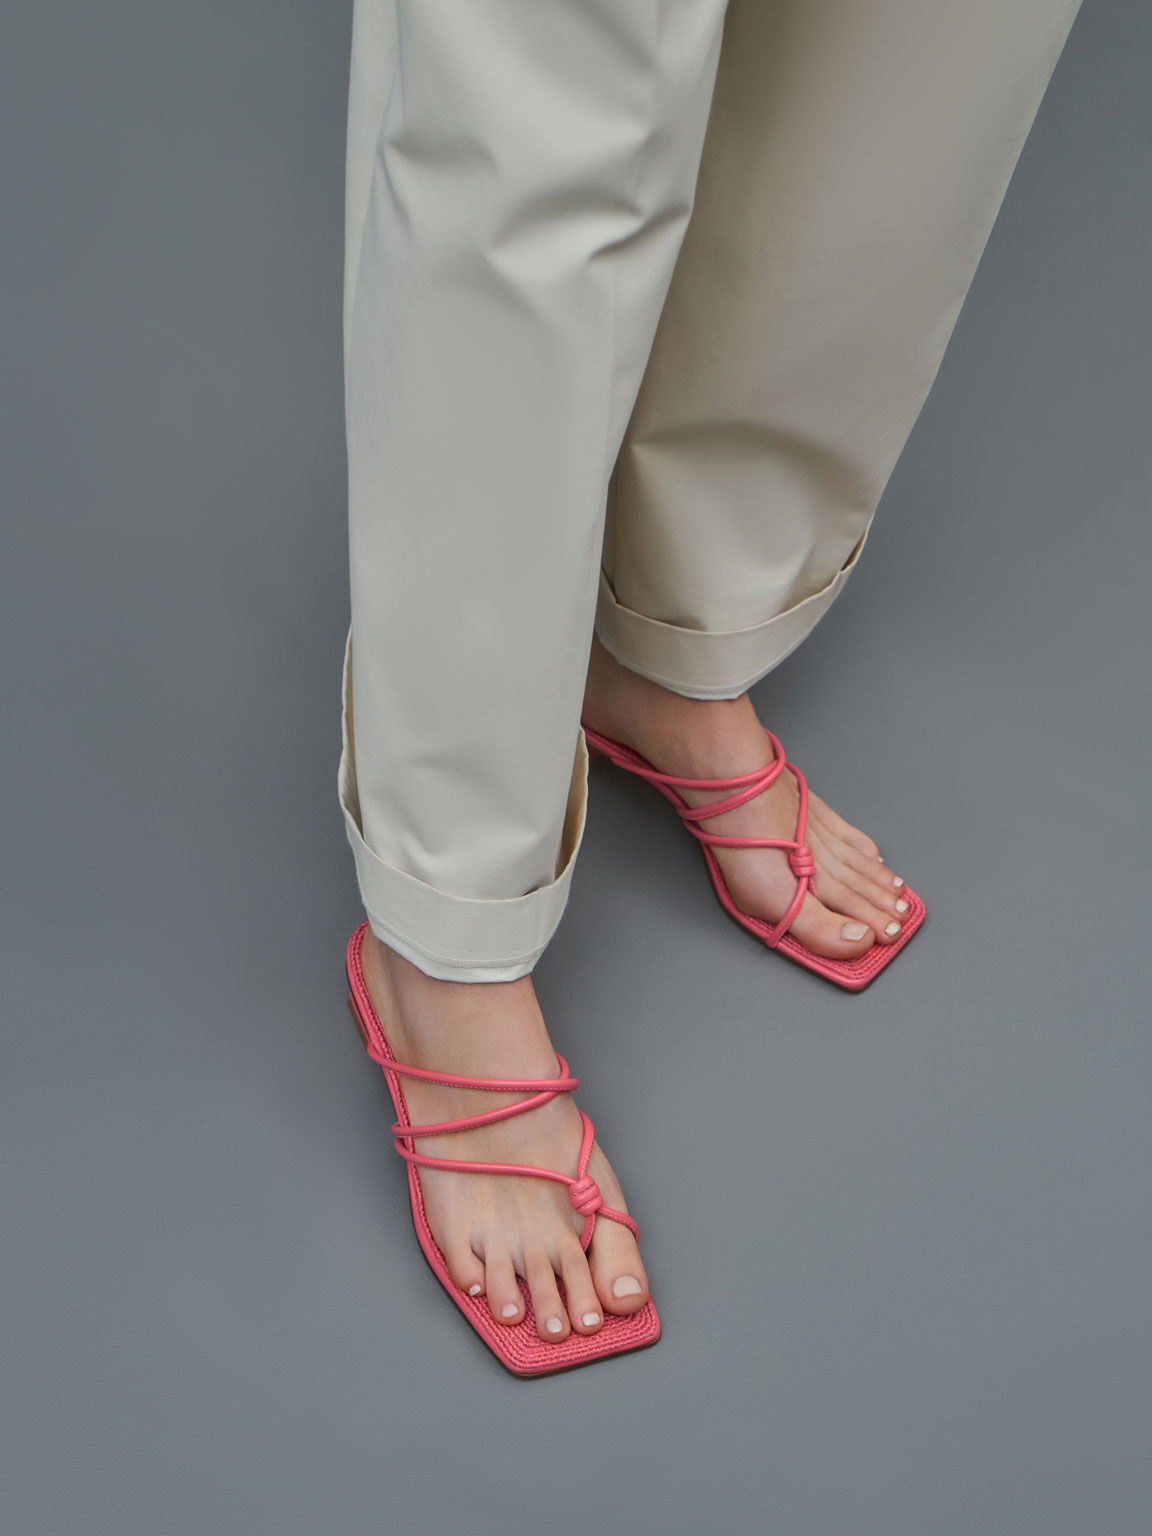 Toe Loop Strappy Heeled Sandals, Red, hi-res